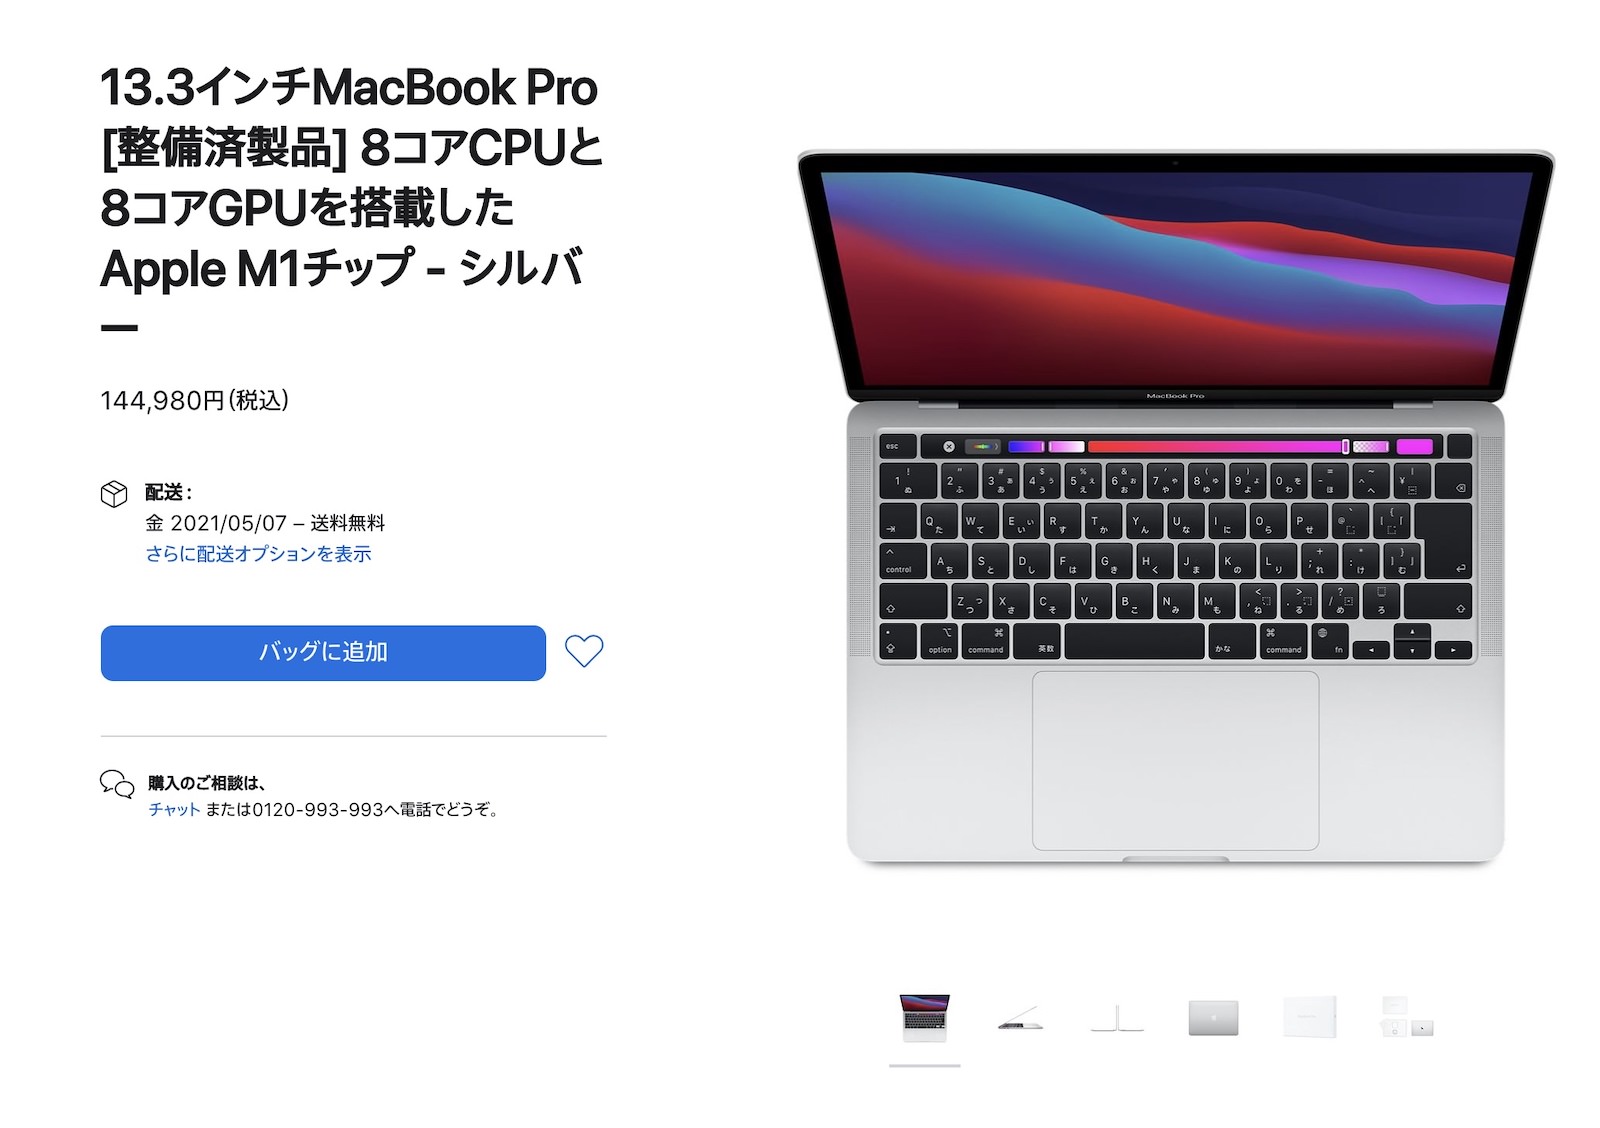 M1 macbook pro 8gb ram 512 ssd